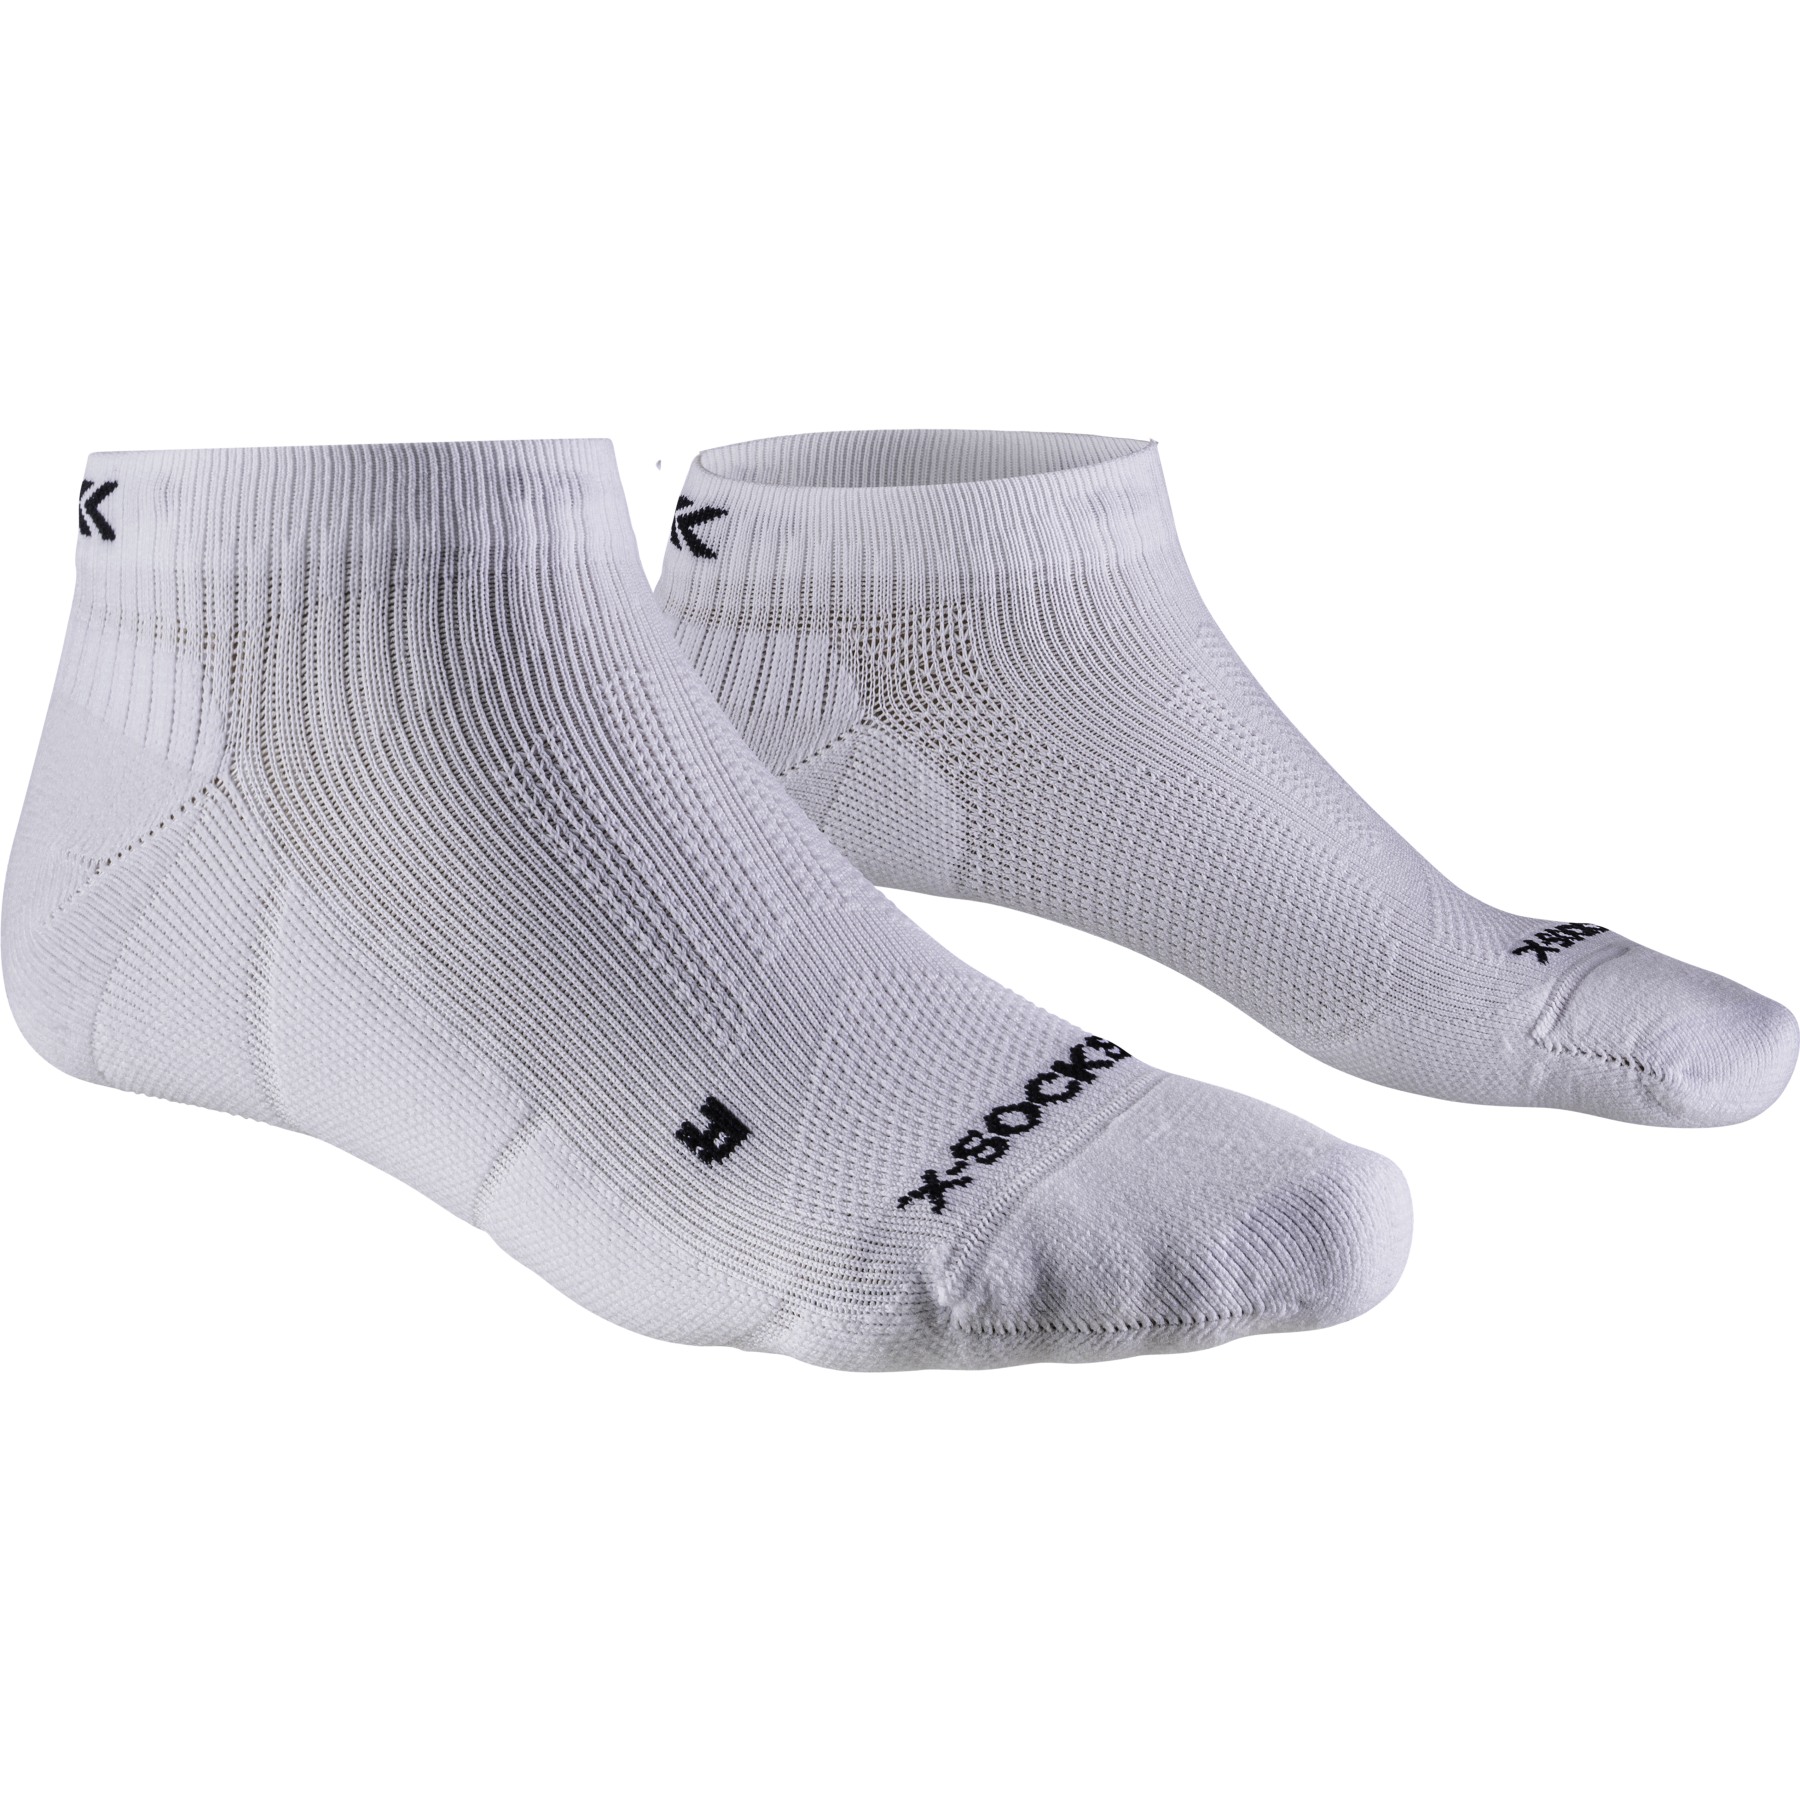 Picture of X-Socks Core Sport Low Cut Socks - arctic white/opal black